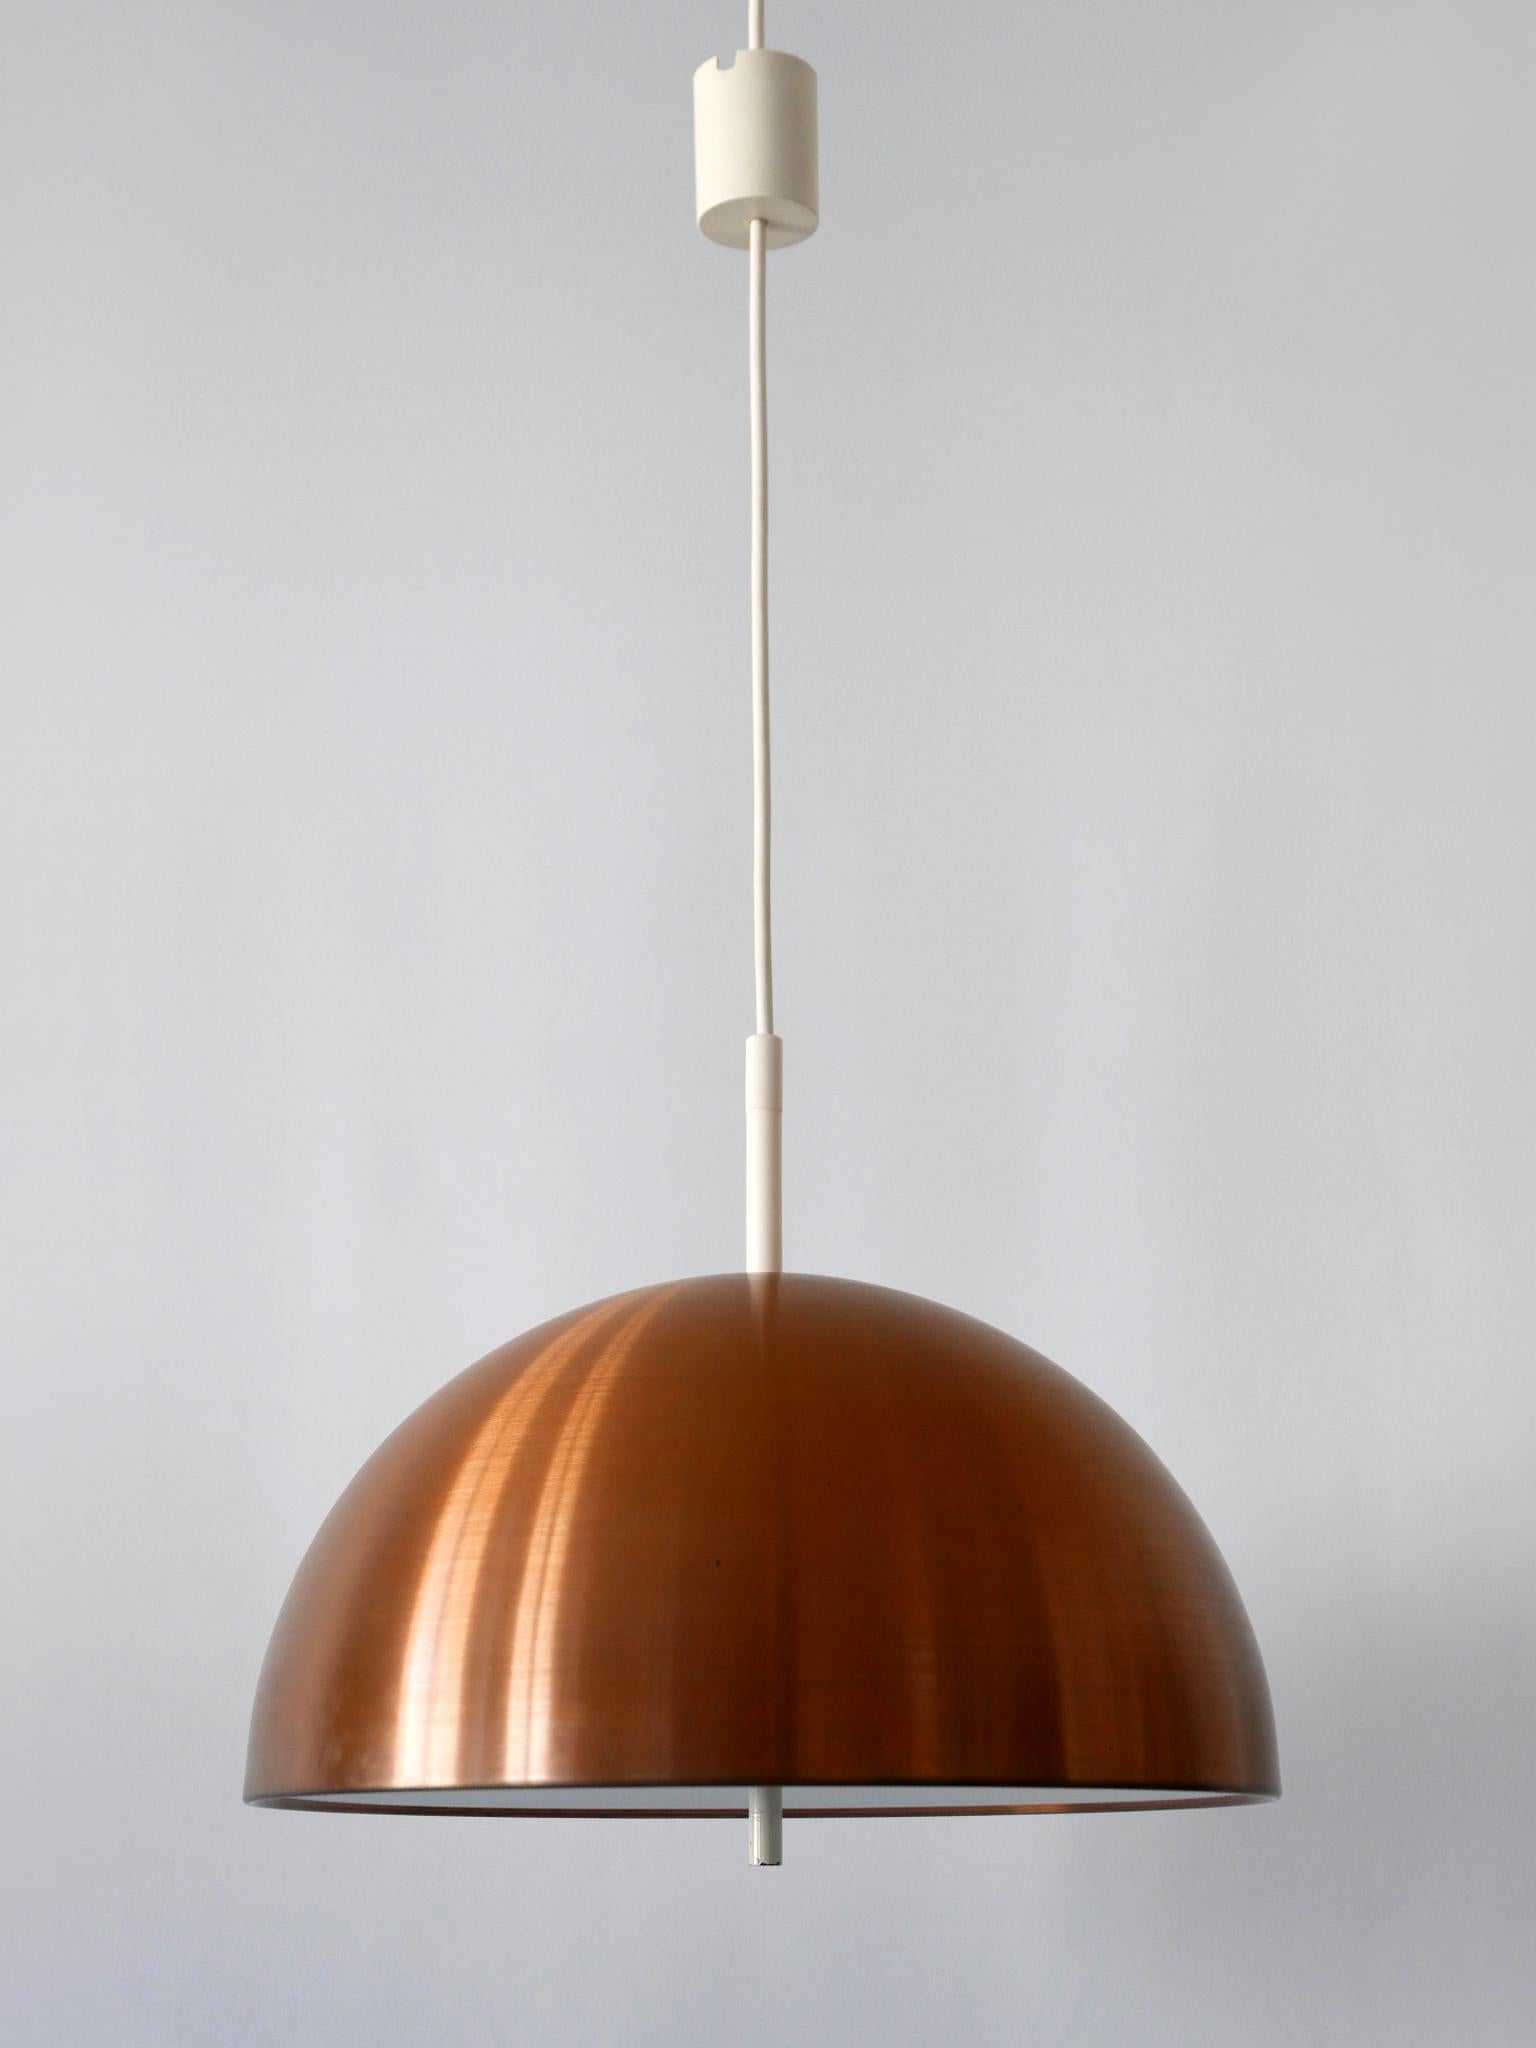 Elegant Mid-Century Modern Copper Pendant Lamp by Staff & Schwarz Germany, 1960s For Sale 4